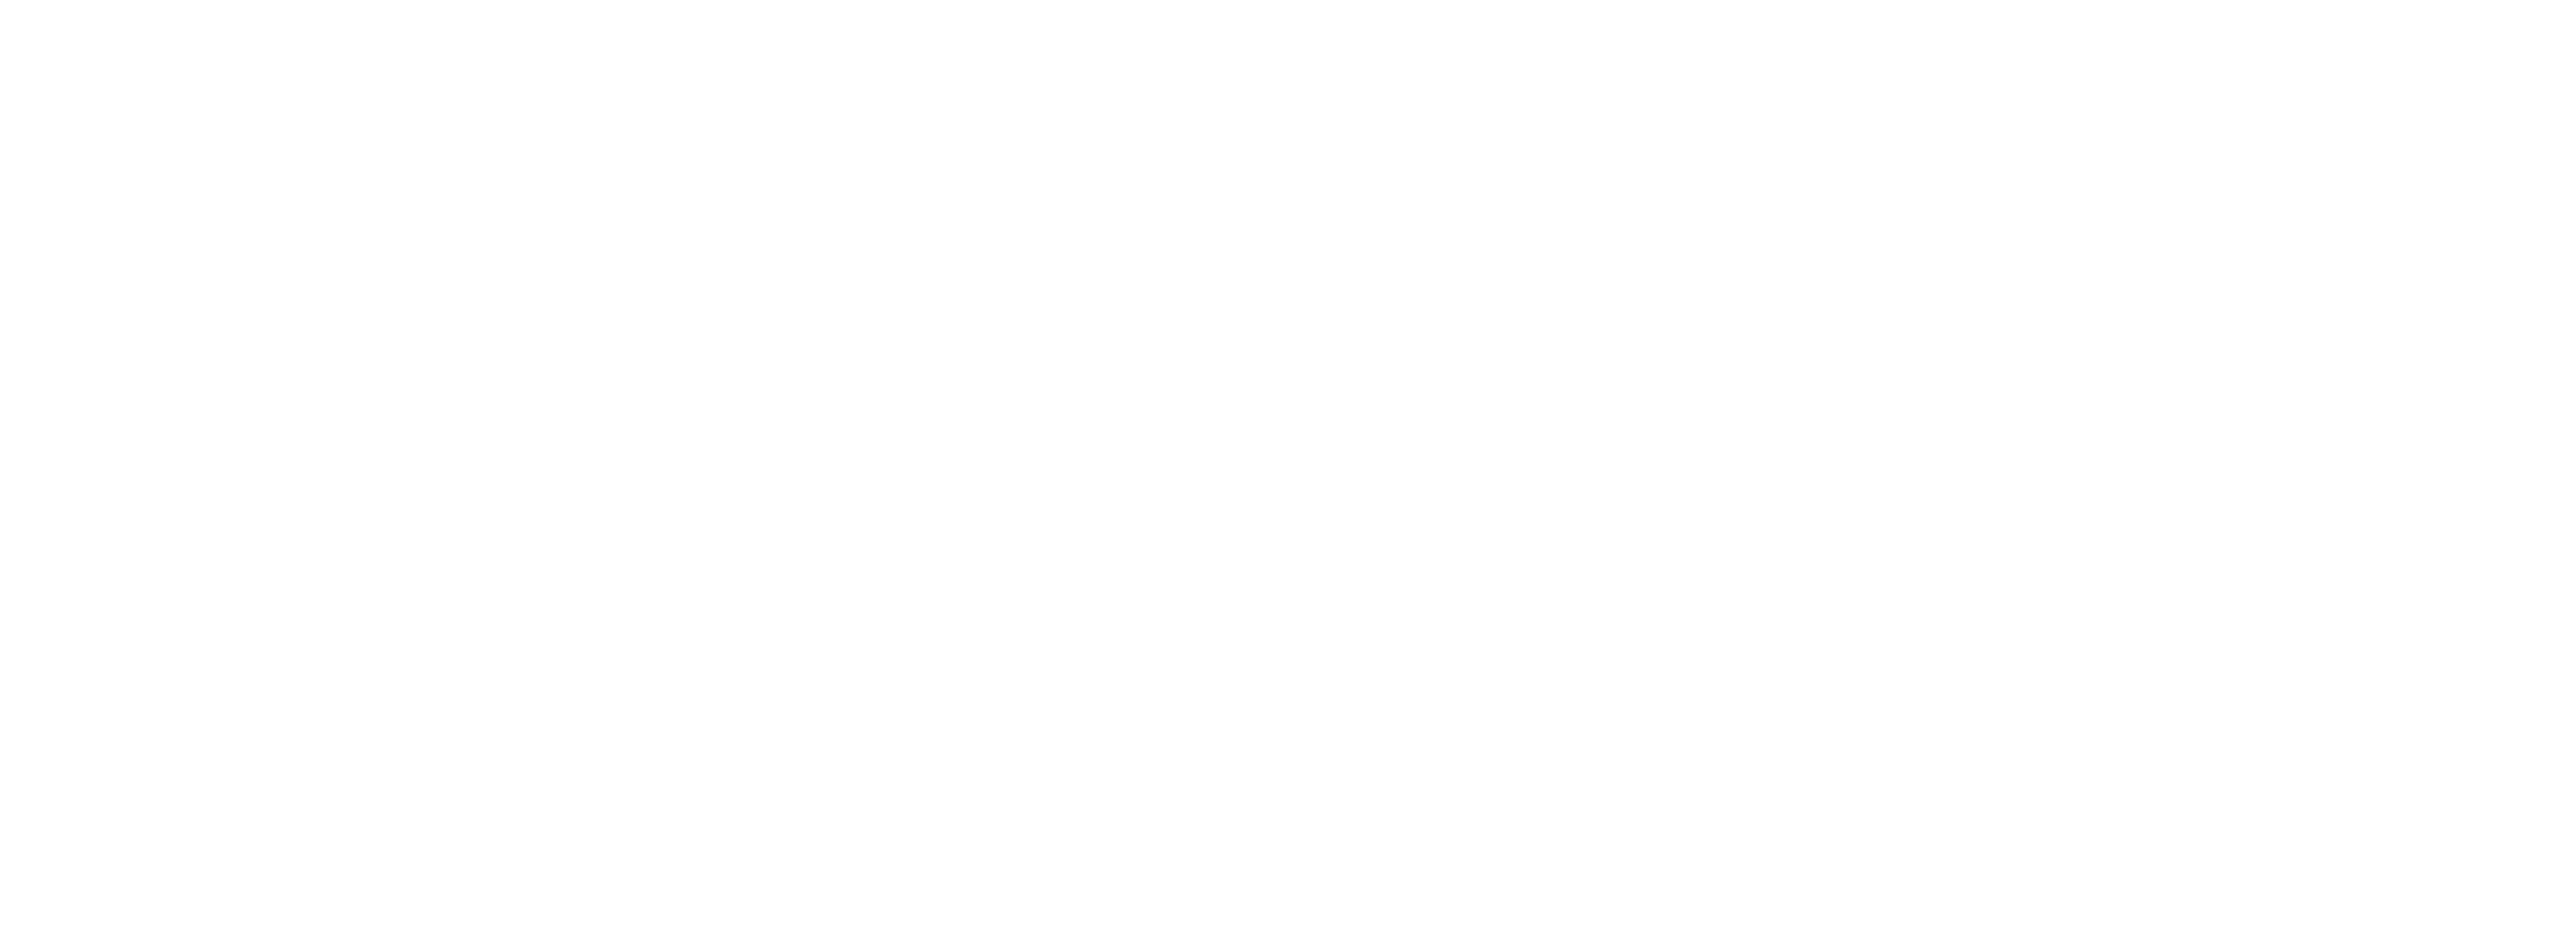 Dynamic Drains Plumbing & Drain Experts Logo